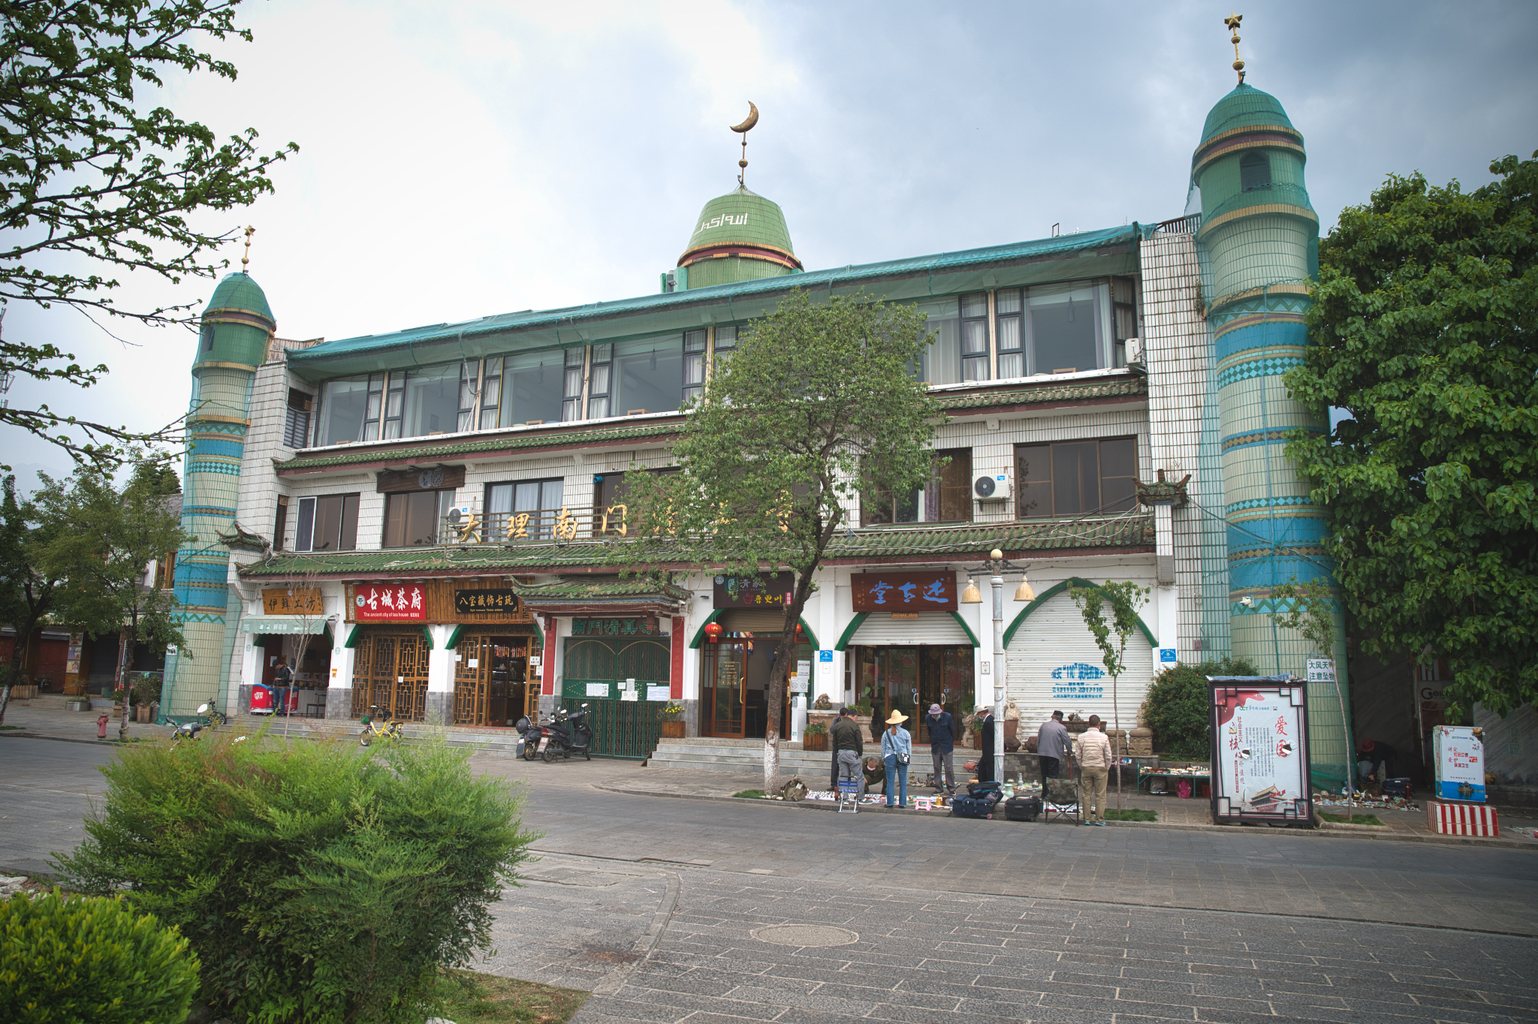 Picture: Dali's main mosque was rebuilt in a classic reform-era style.